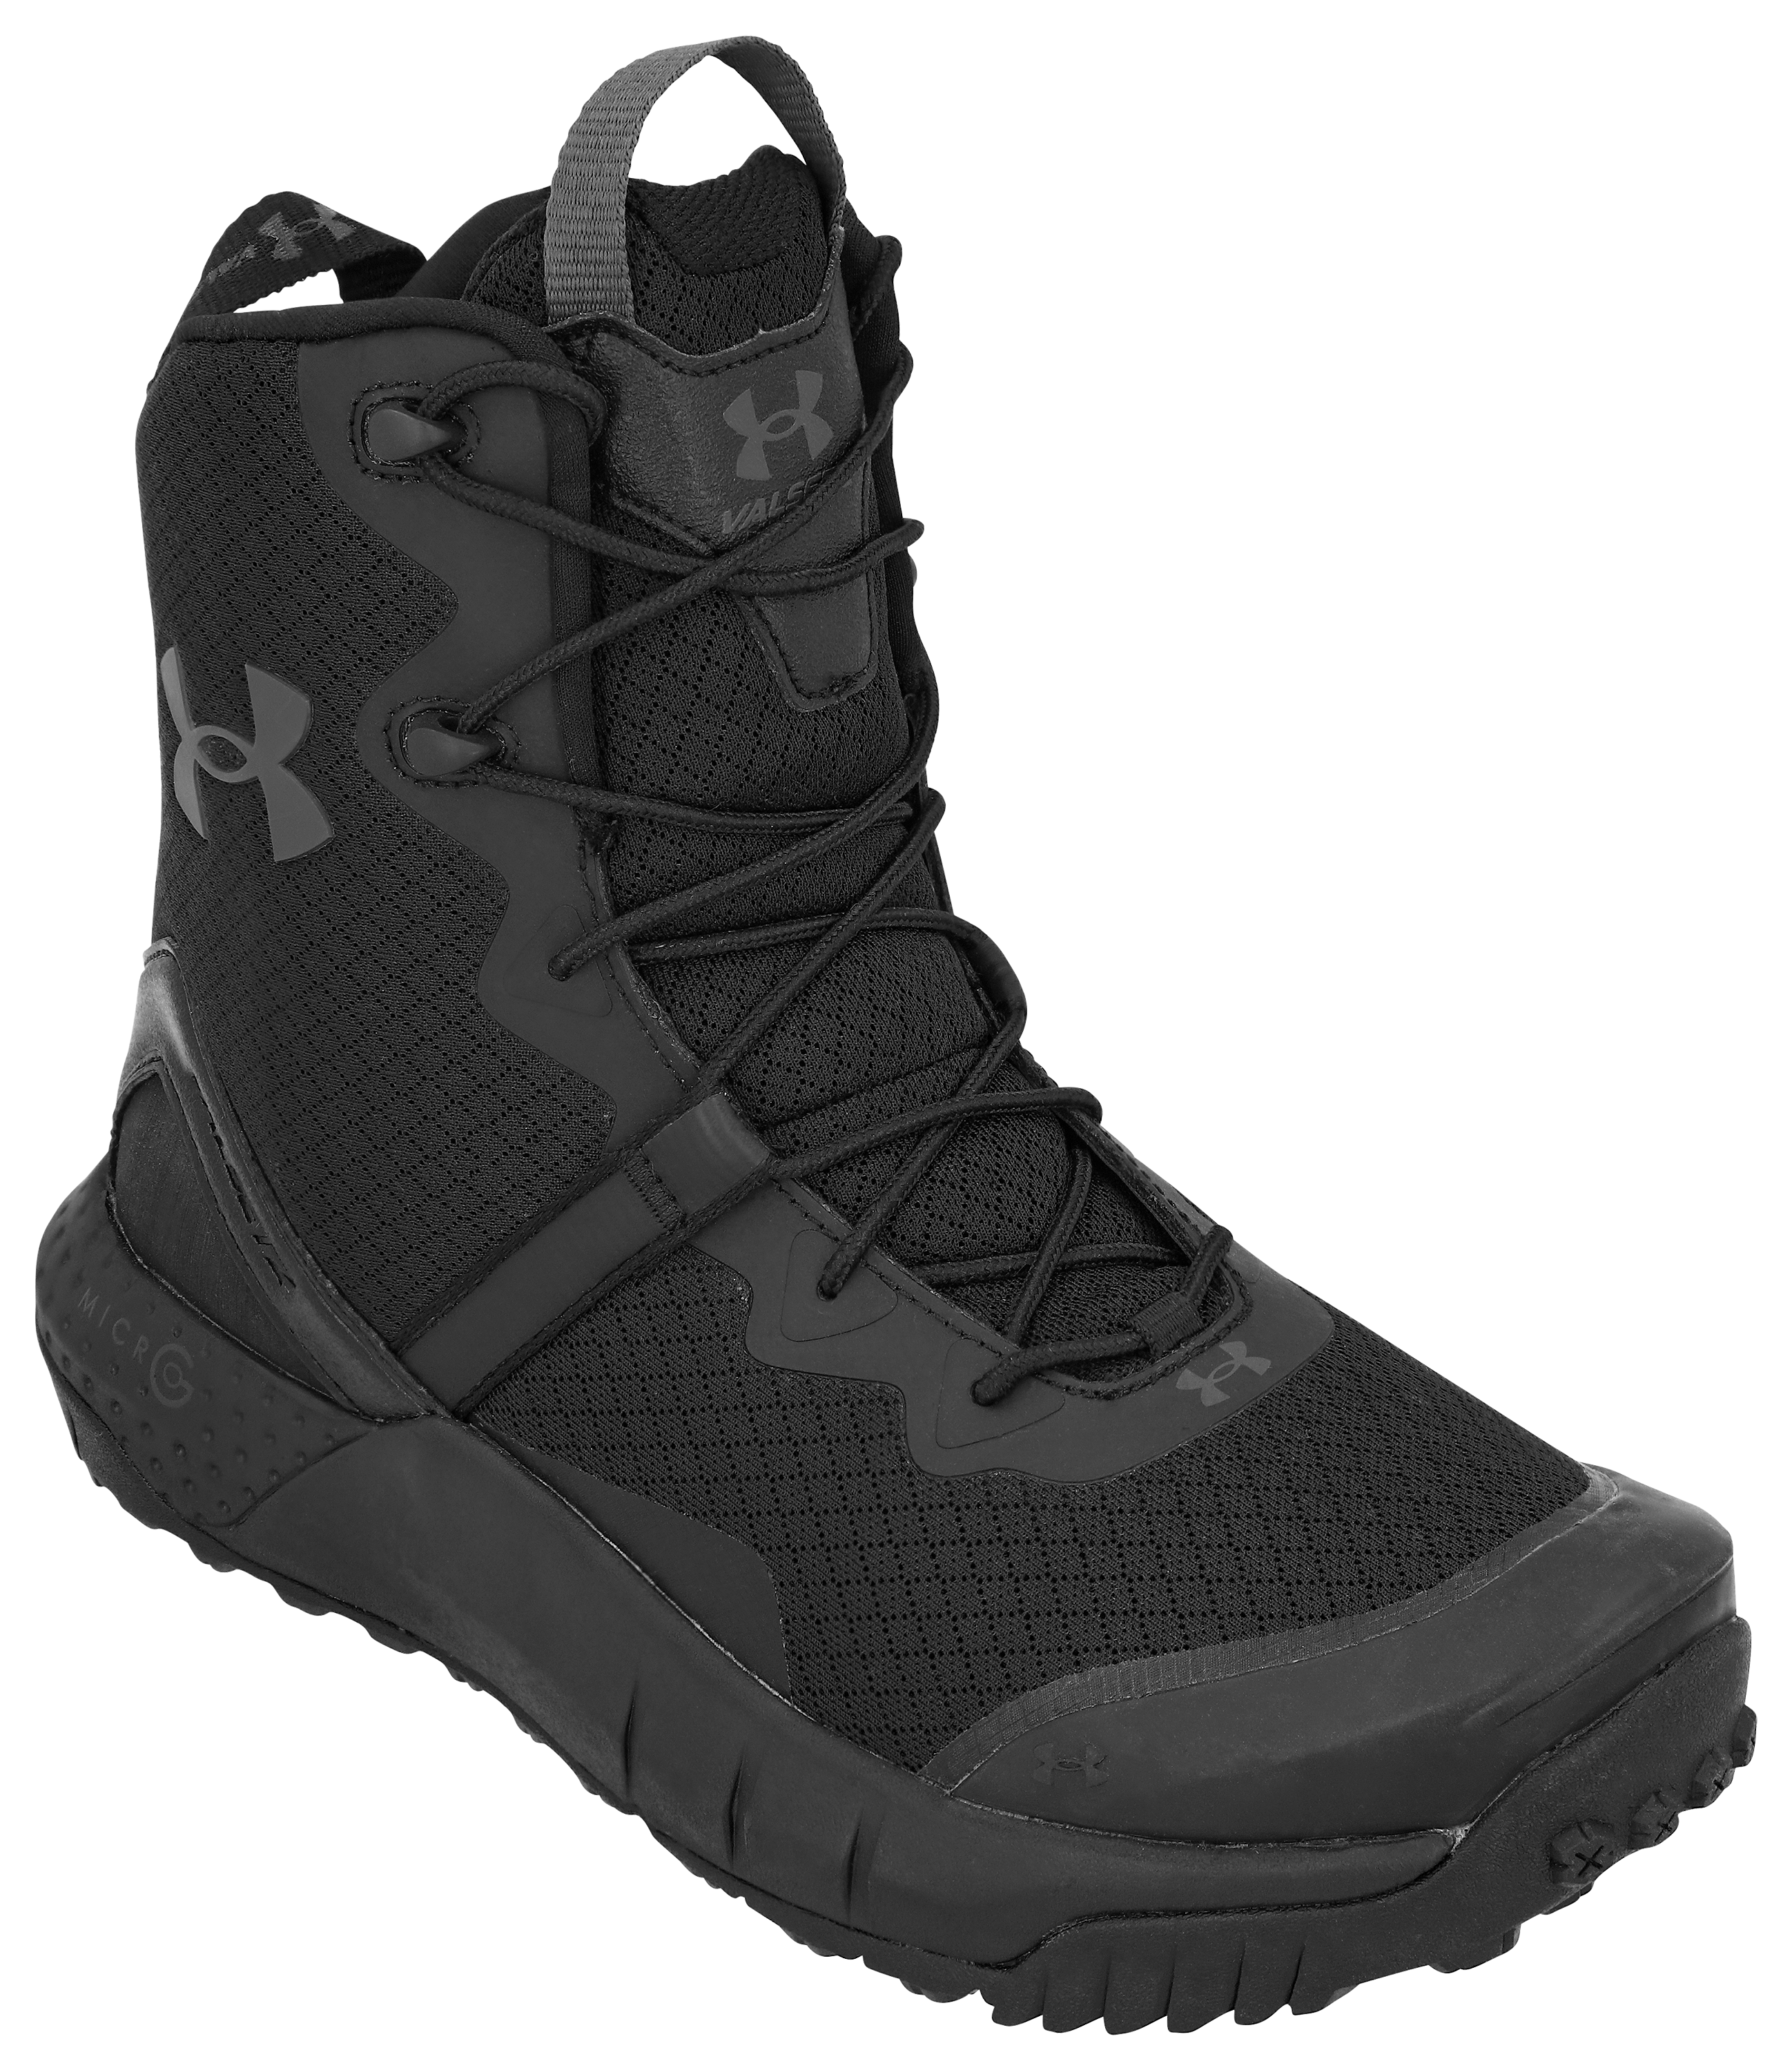 Under Armour Micro G Valsetz Side Zip Tactical Boots for Men - Black - 13M